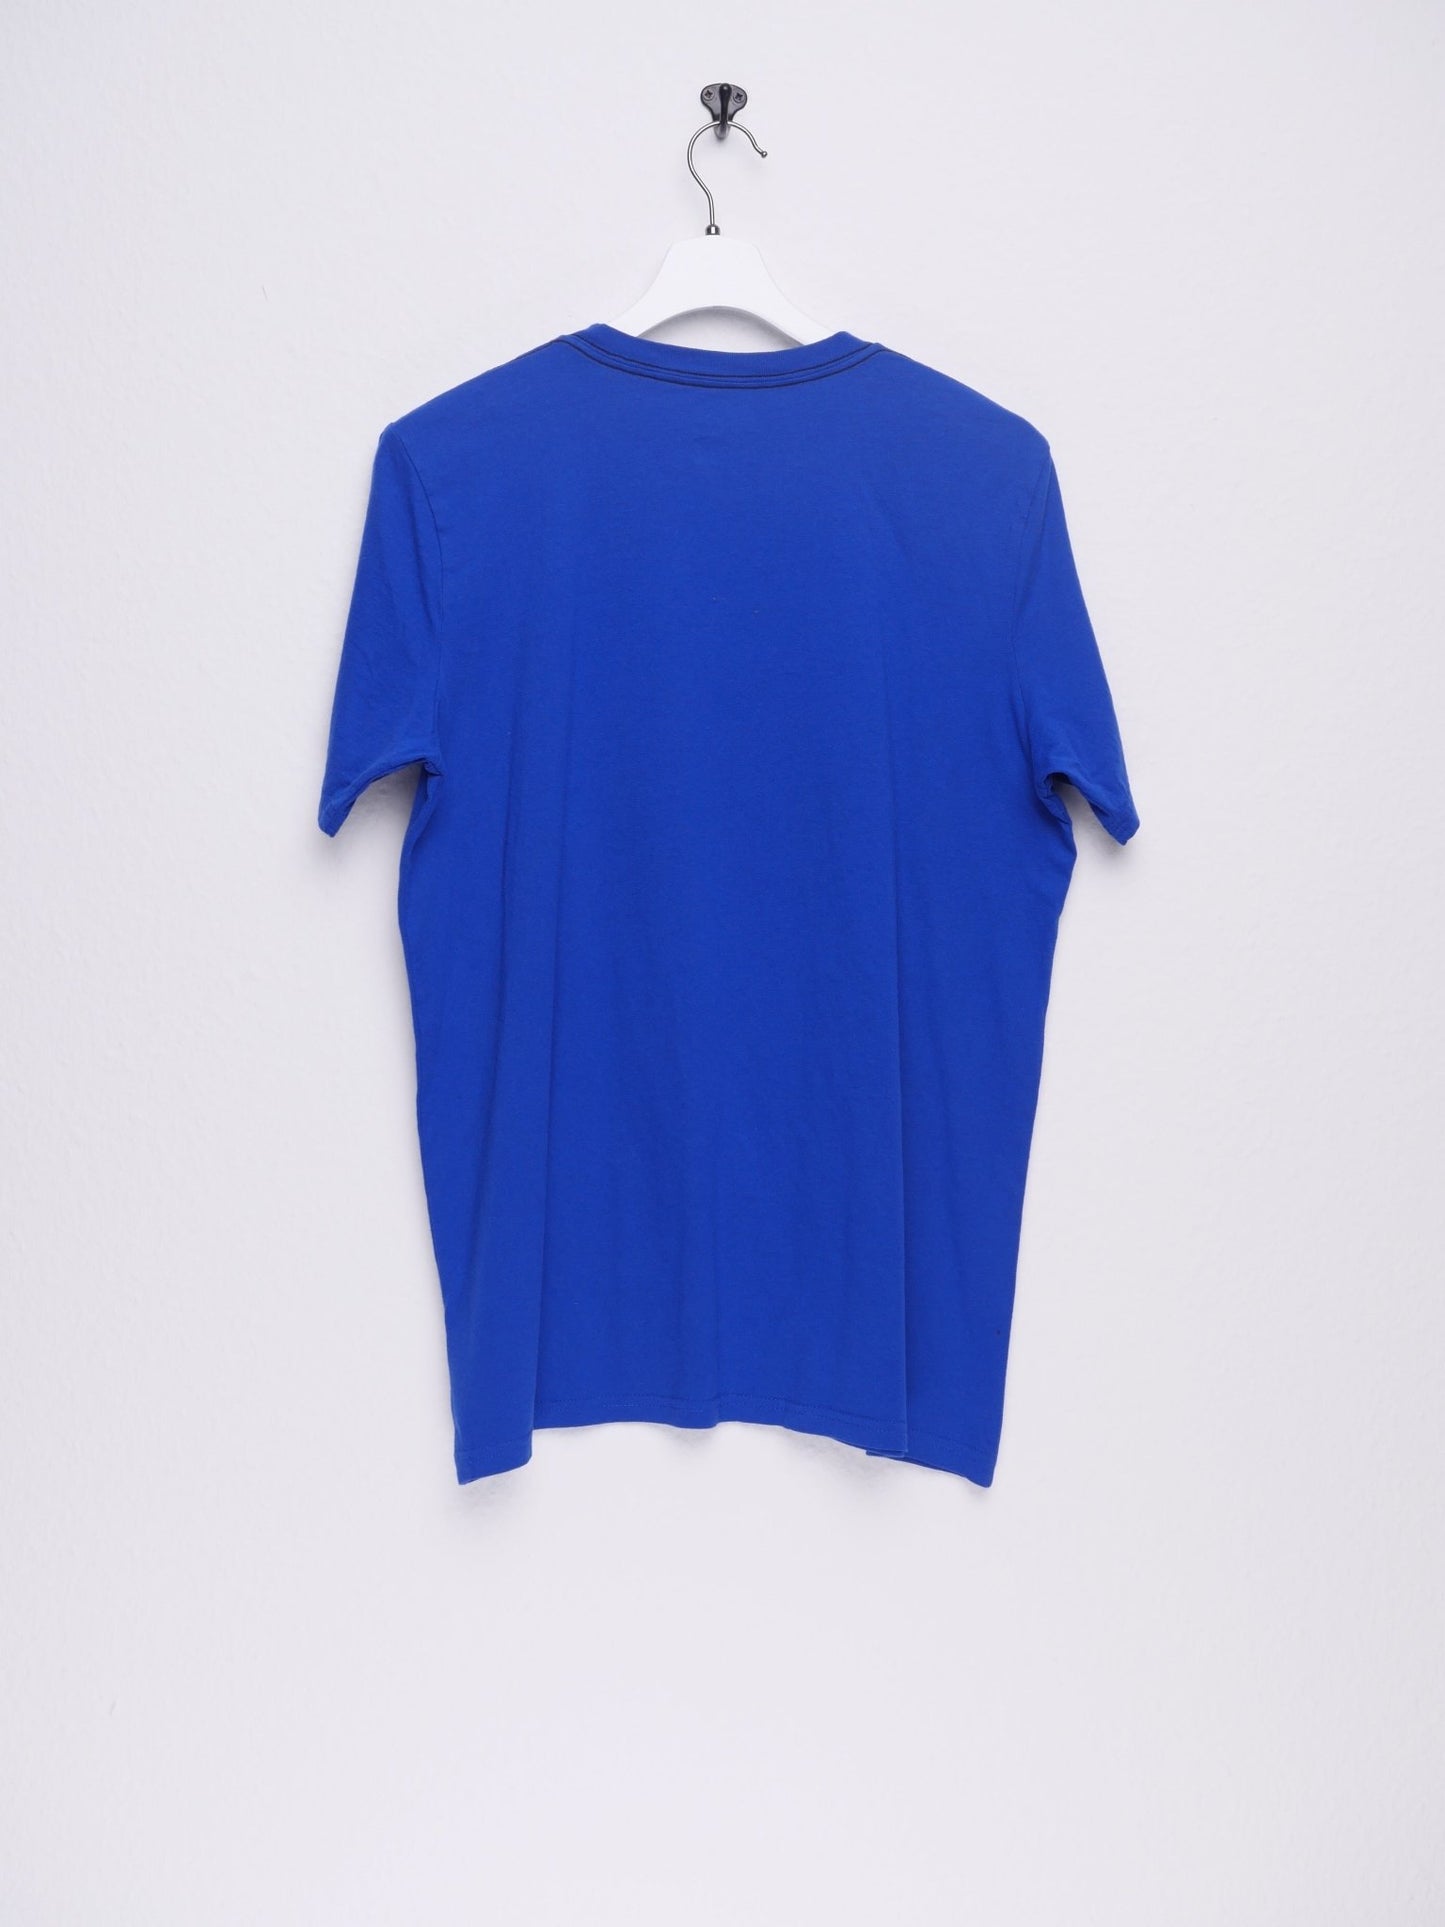 adidas printed Logo blue Shirt - Peeces